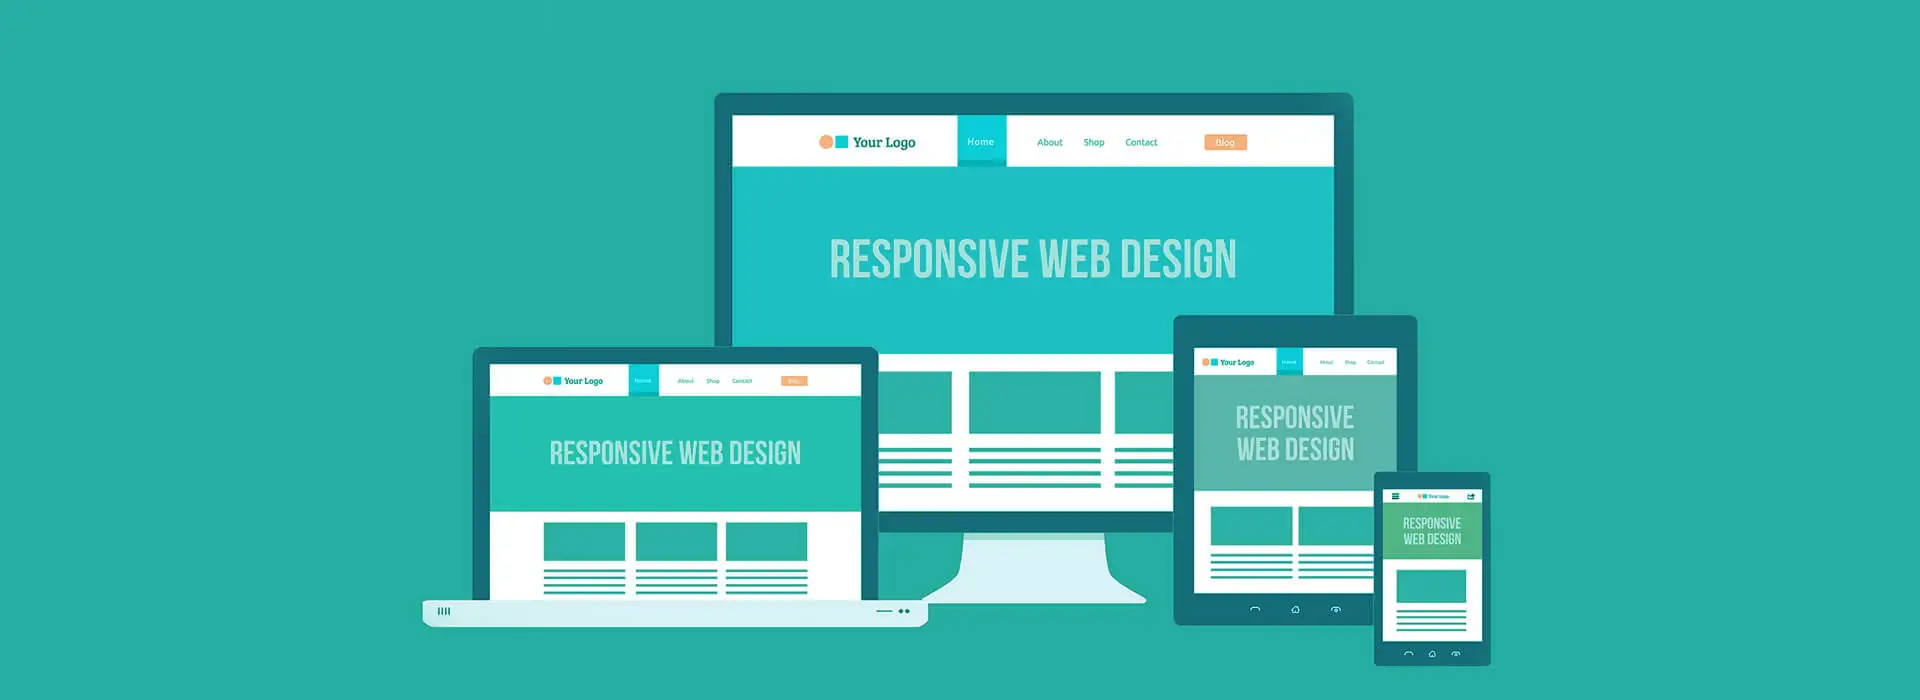 what is responsive web design - WebRedone